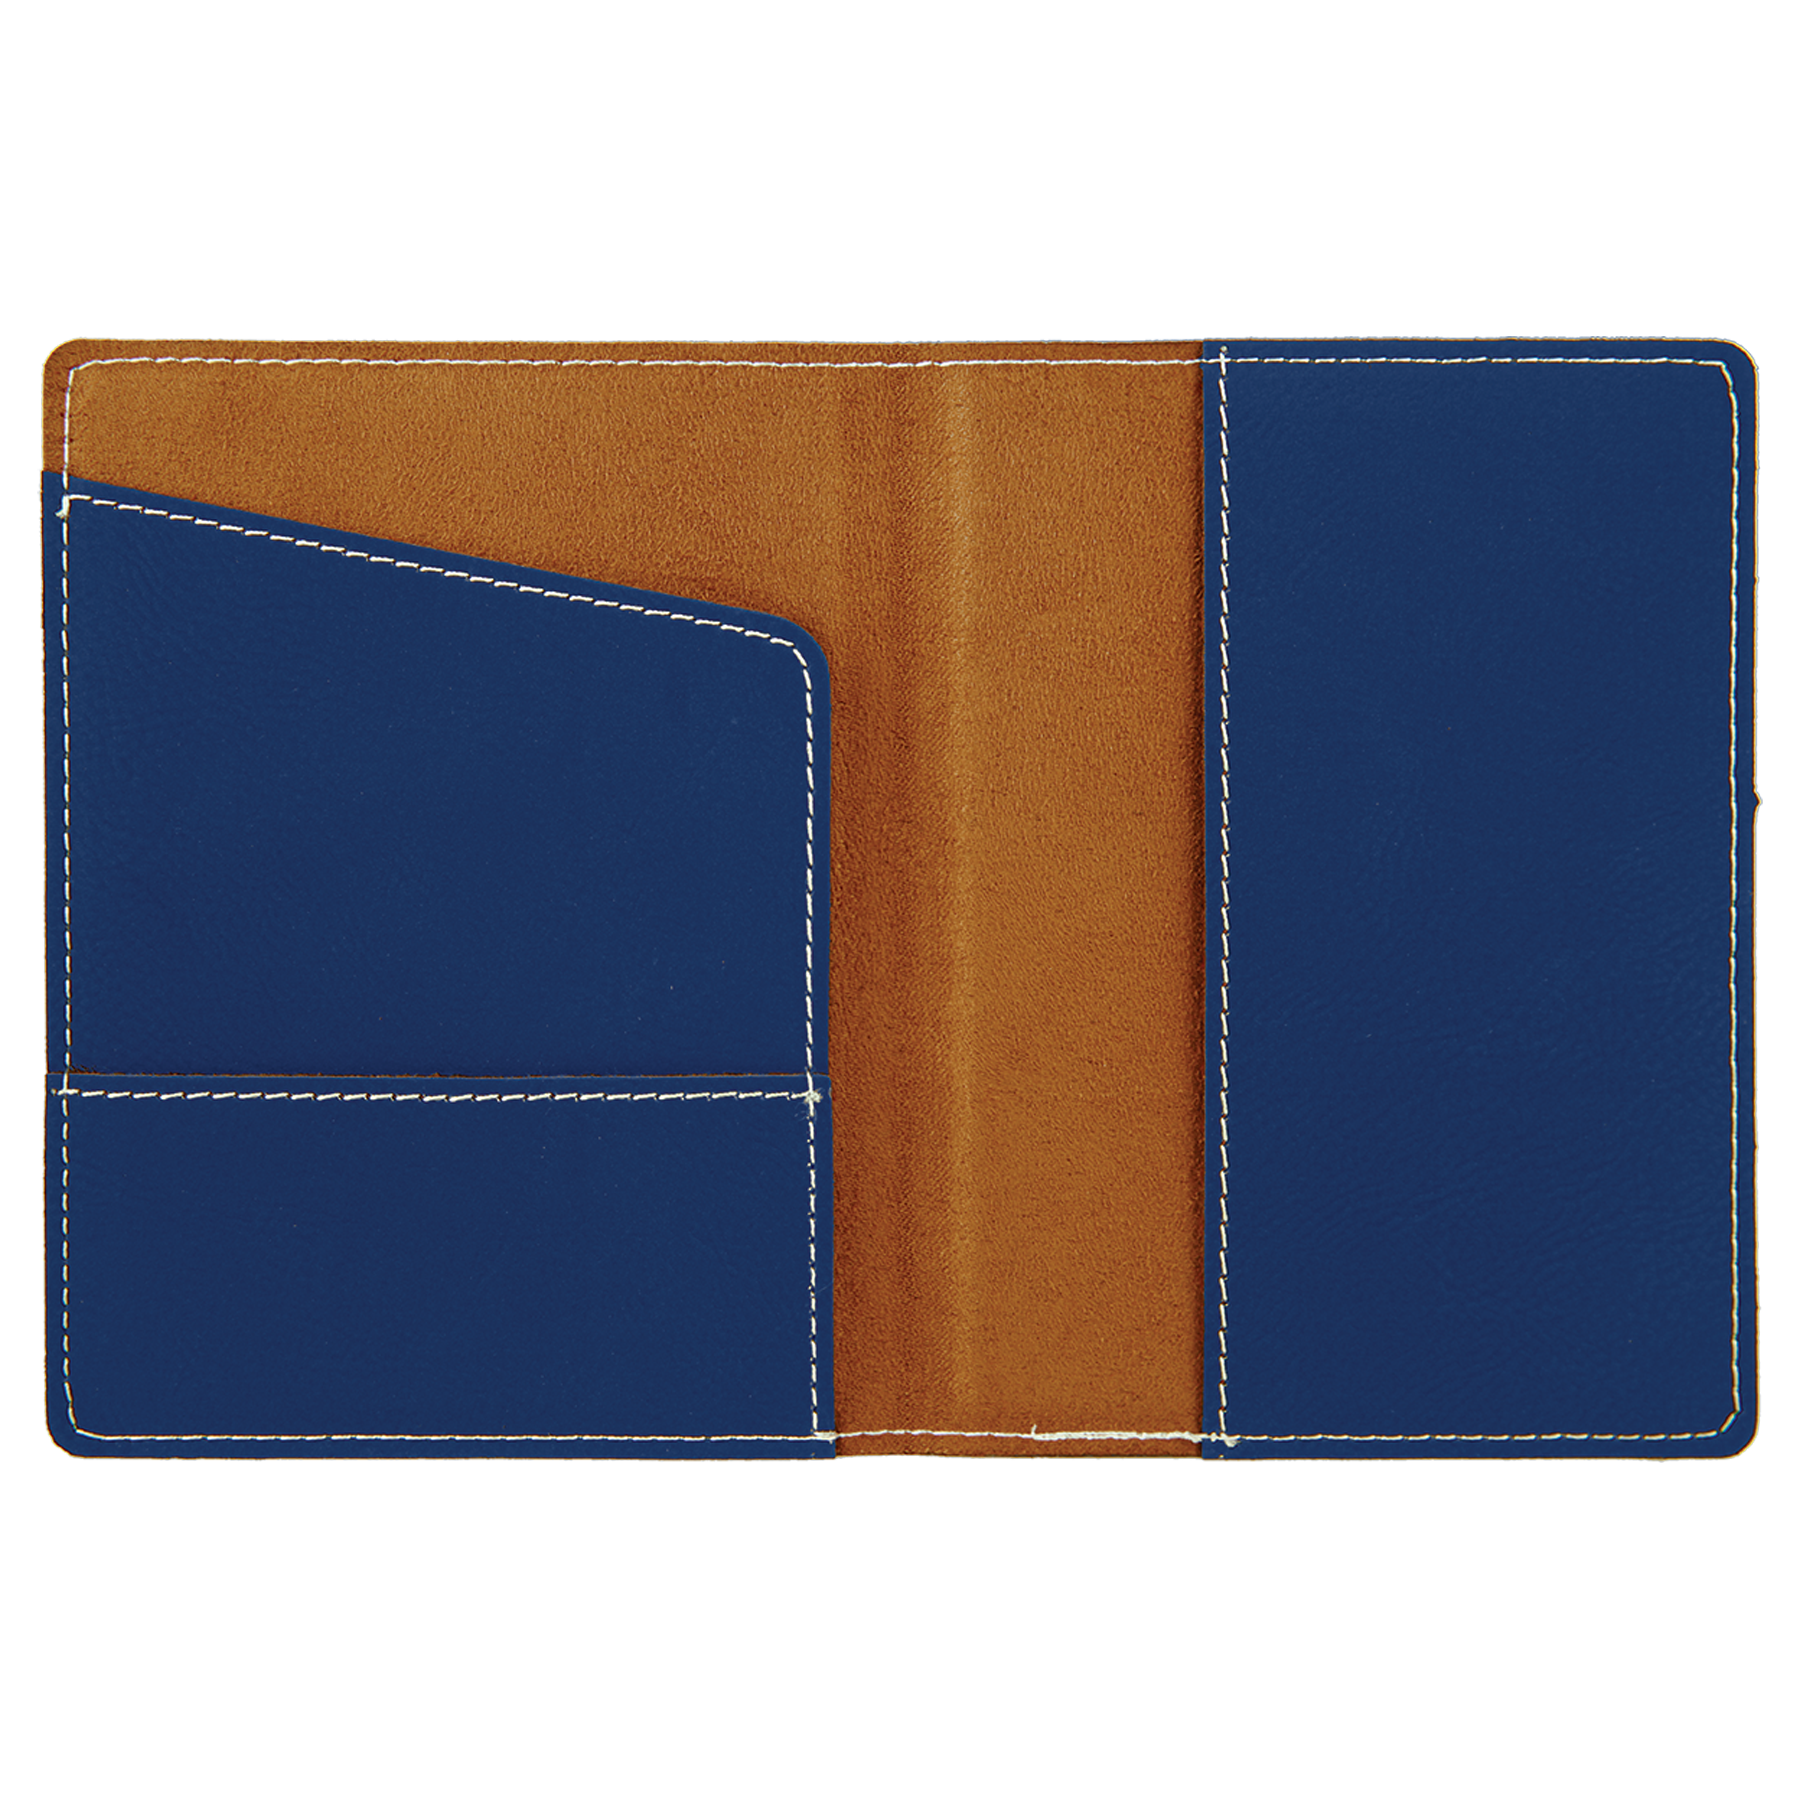 4 1/4" x 5 1/2" Leatherette Passport Holder